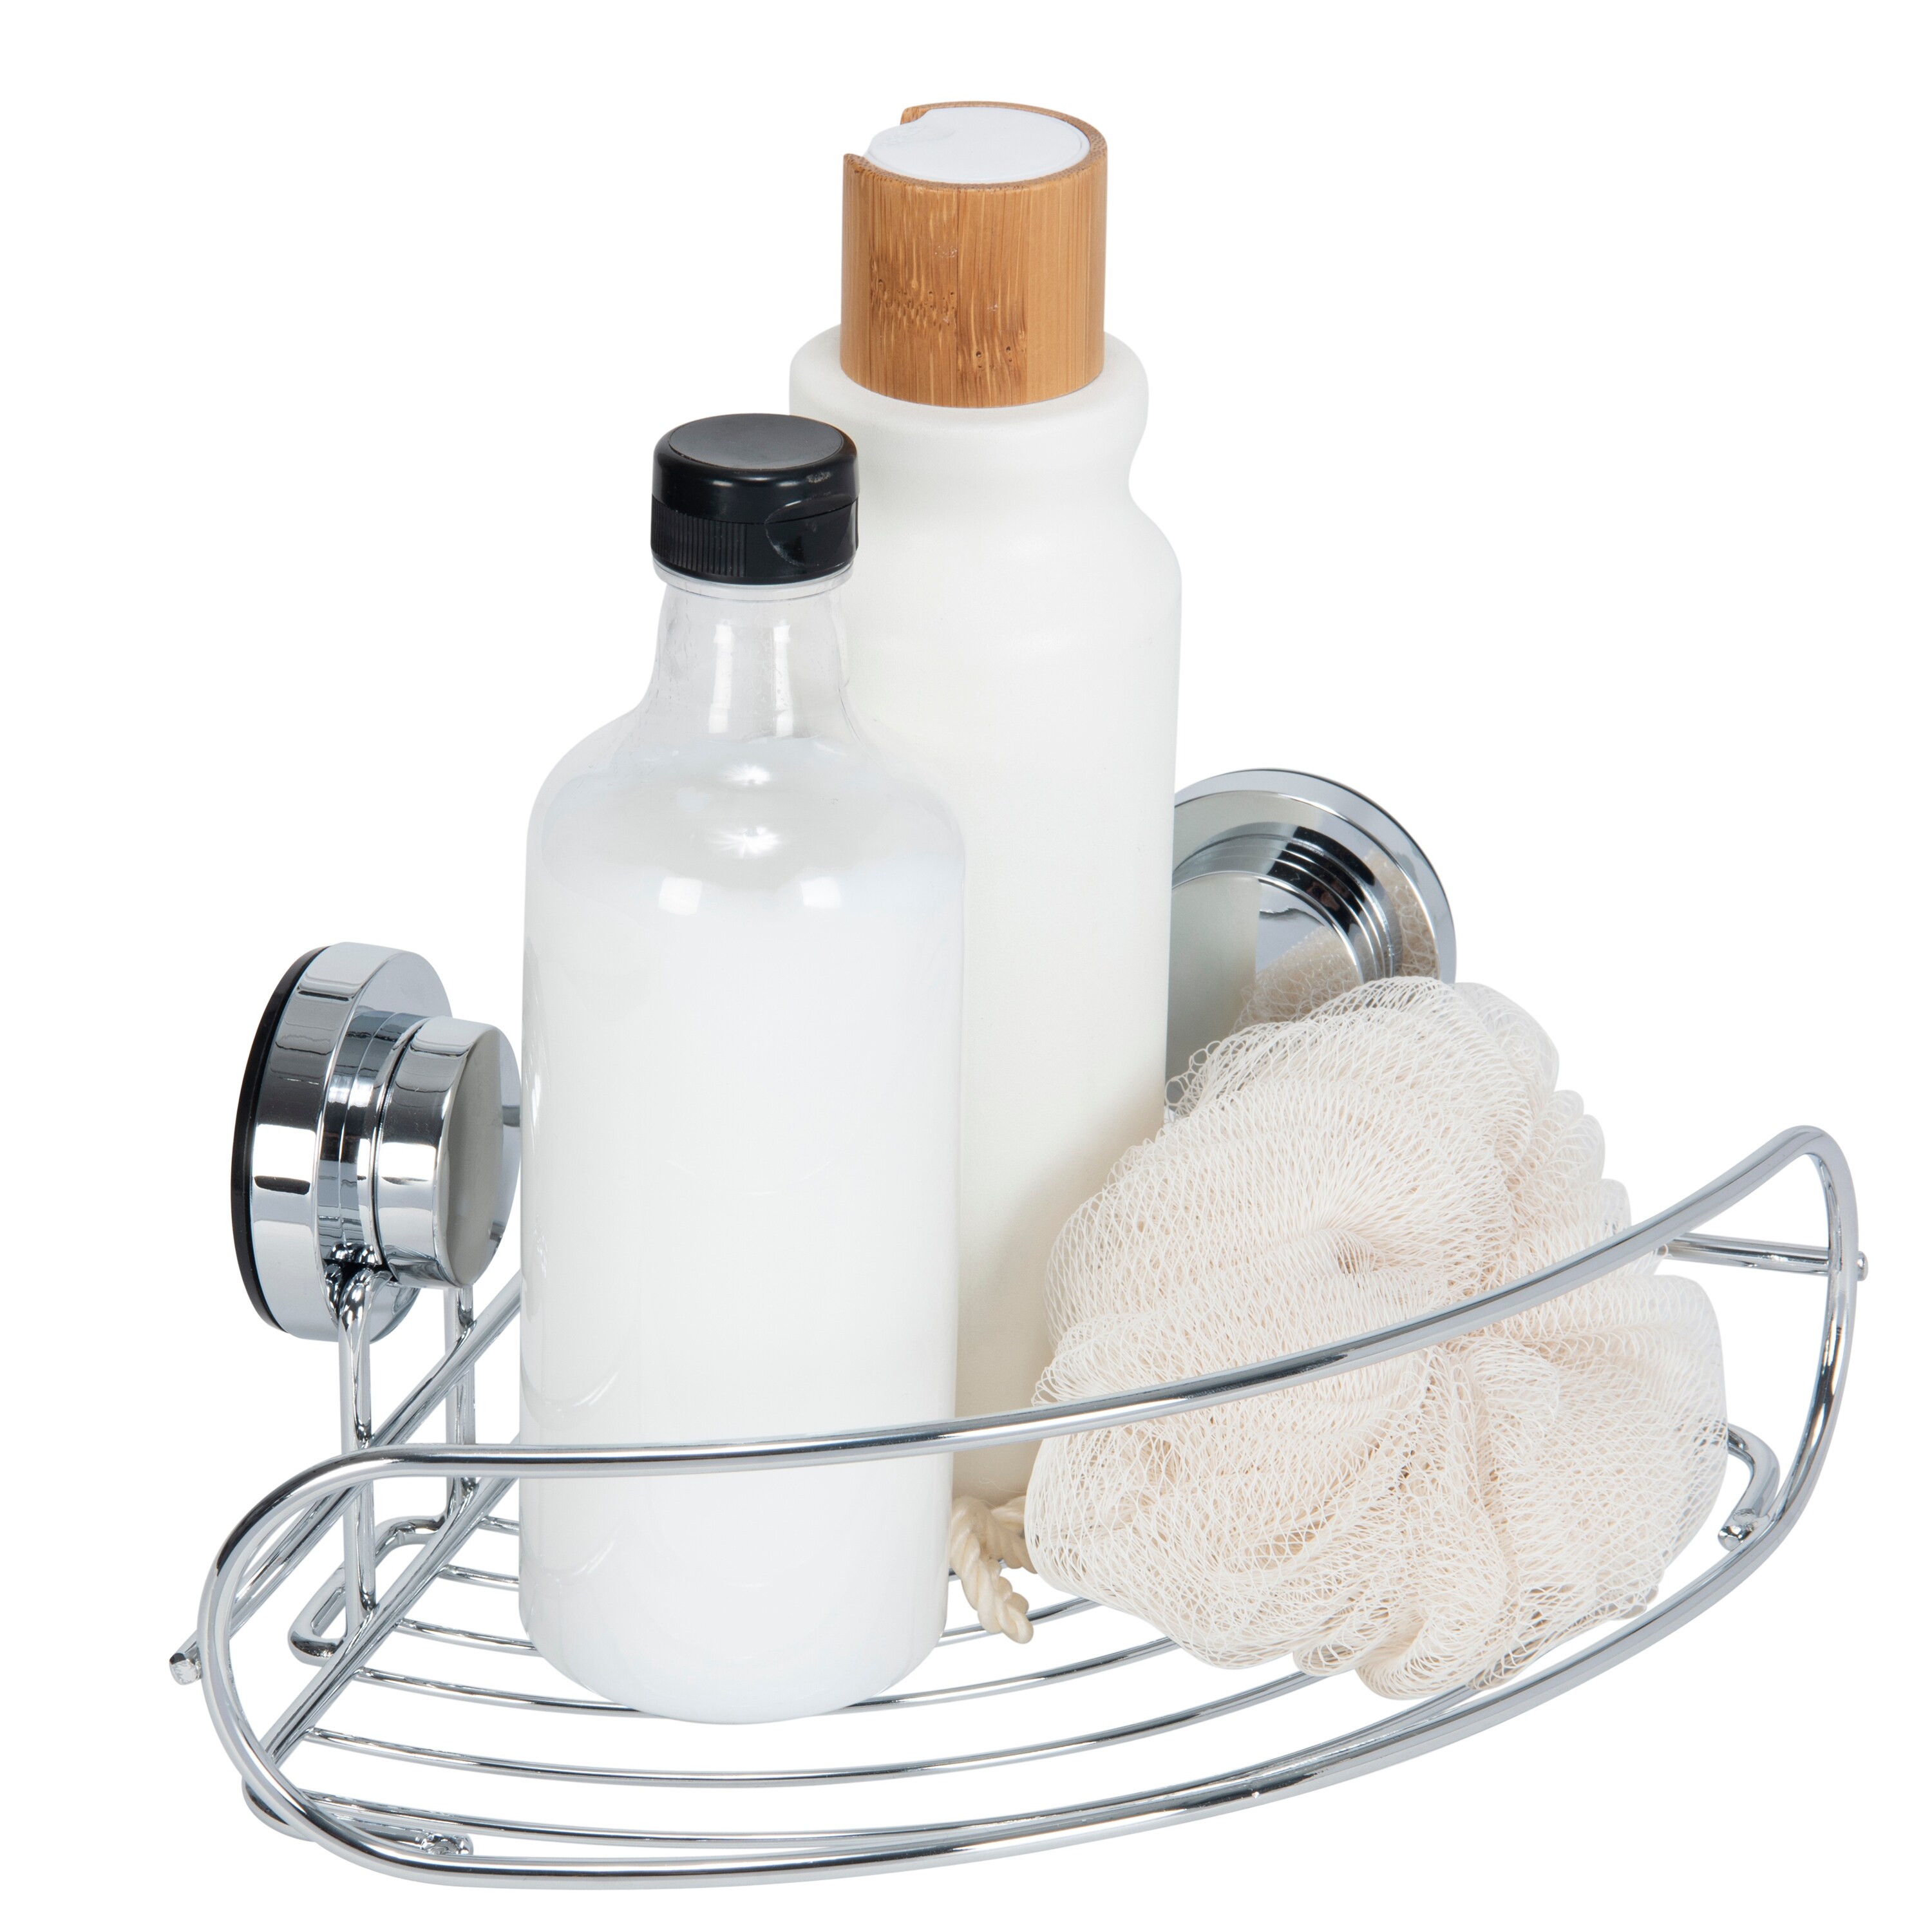 https://ak1.ostkcdn.com/images/products/is/images/direct/efe362f19ab30d2b1486e342fd6bb6836b5de59a/Bath-Bliss-Suction-Cup-Bathroom-Corner-Shelf-Basket-in-Chrome.jpg